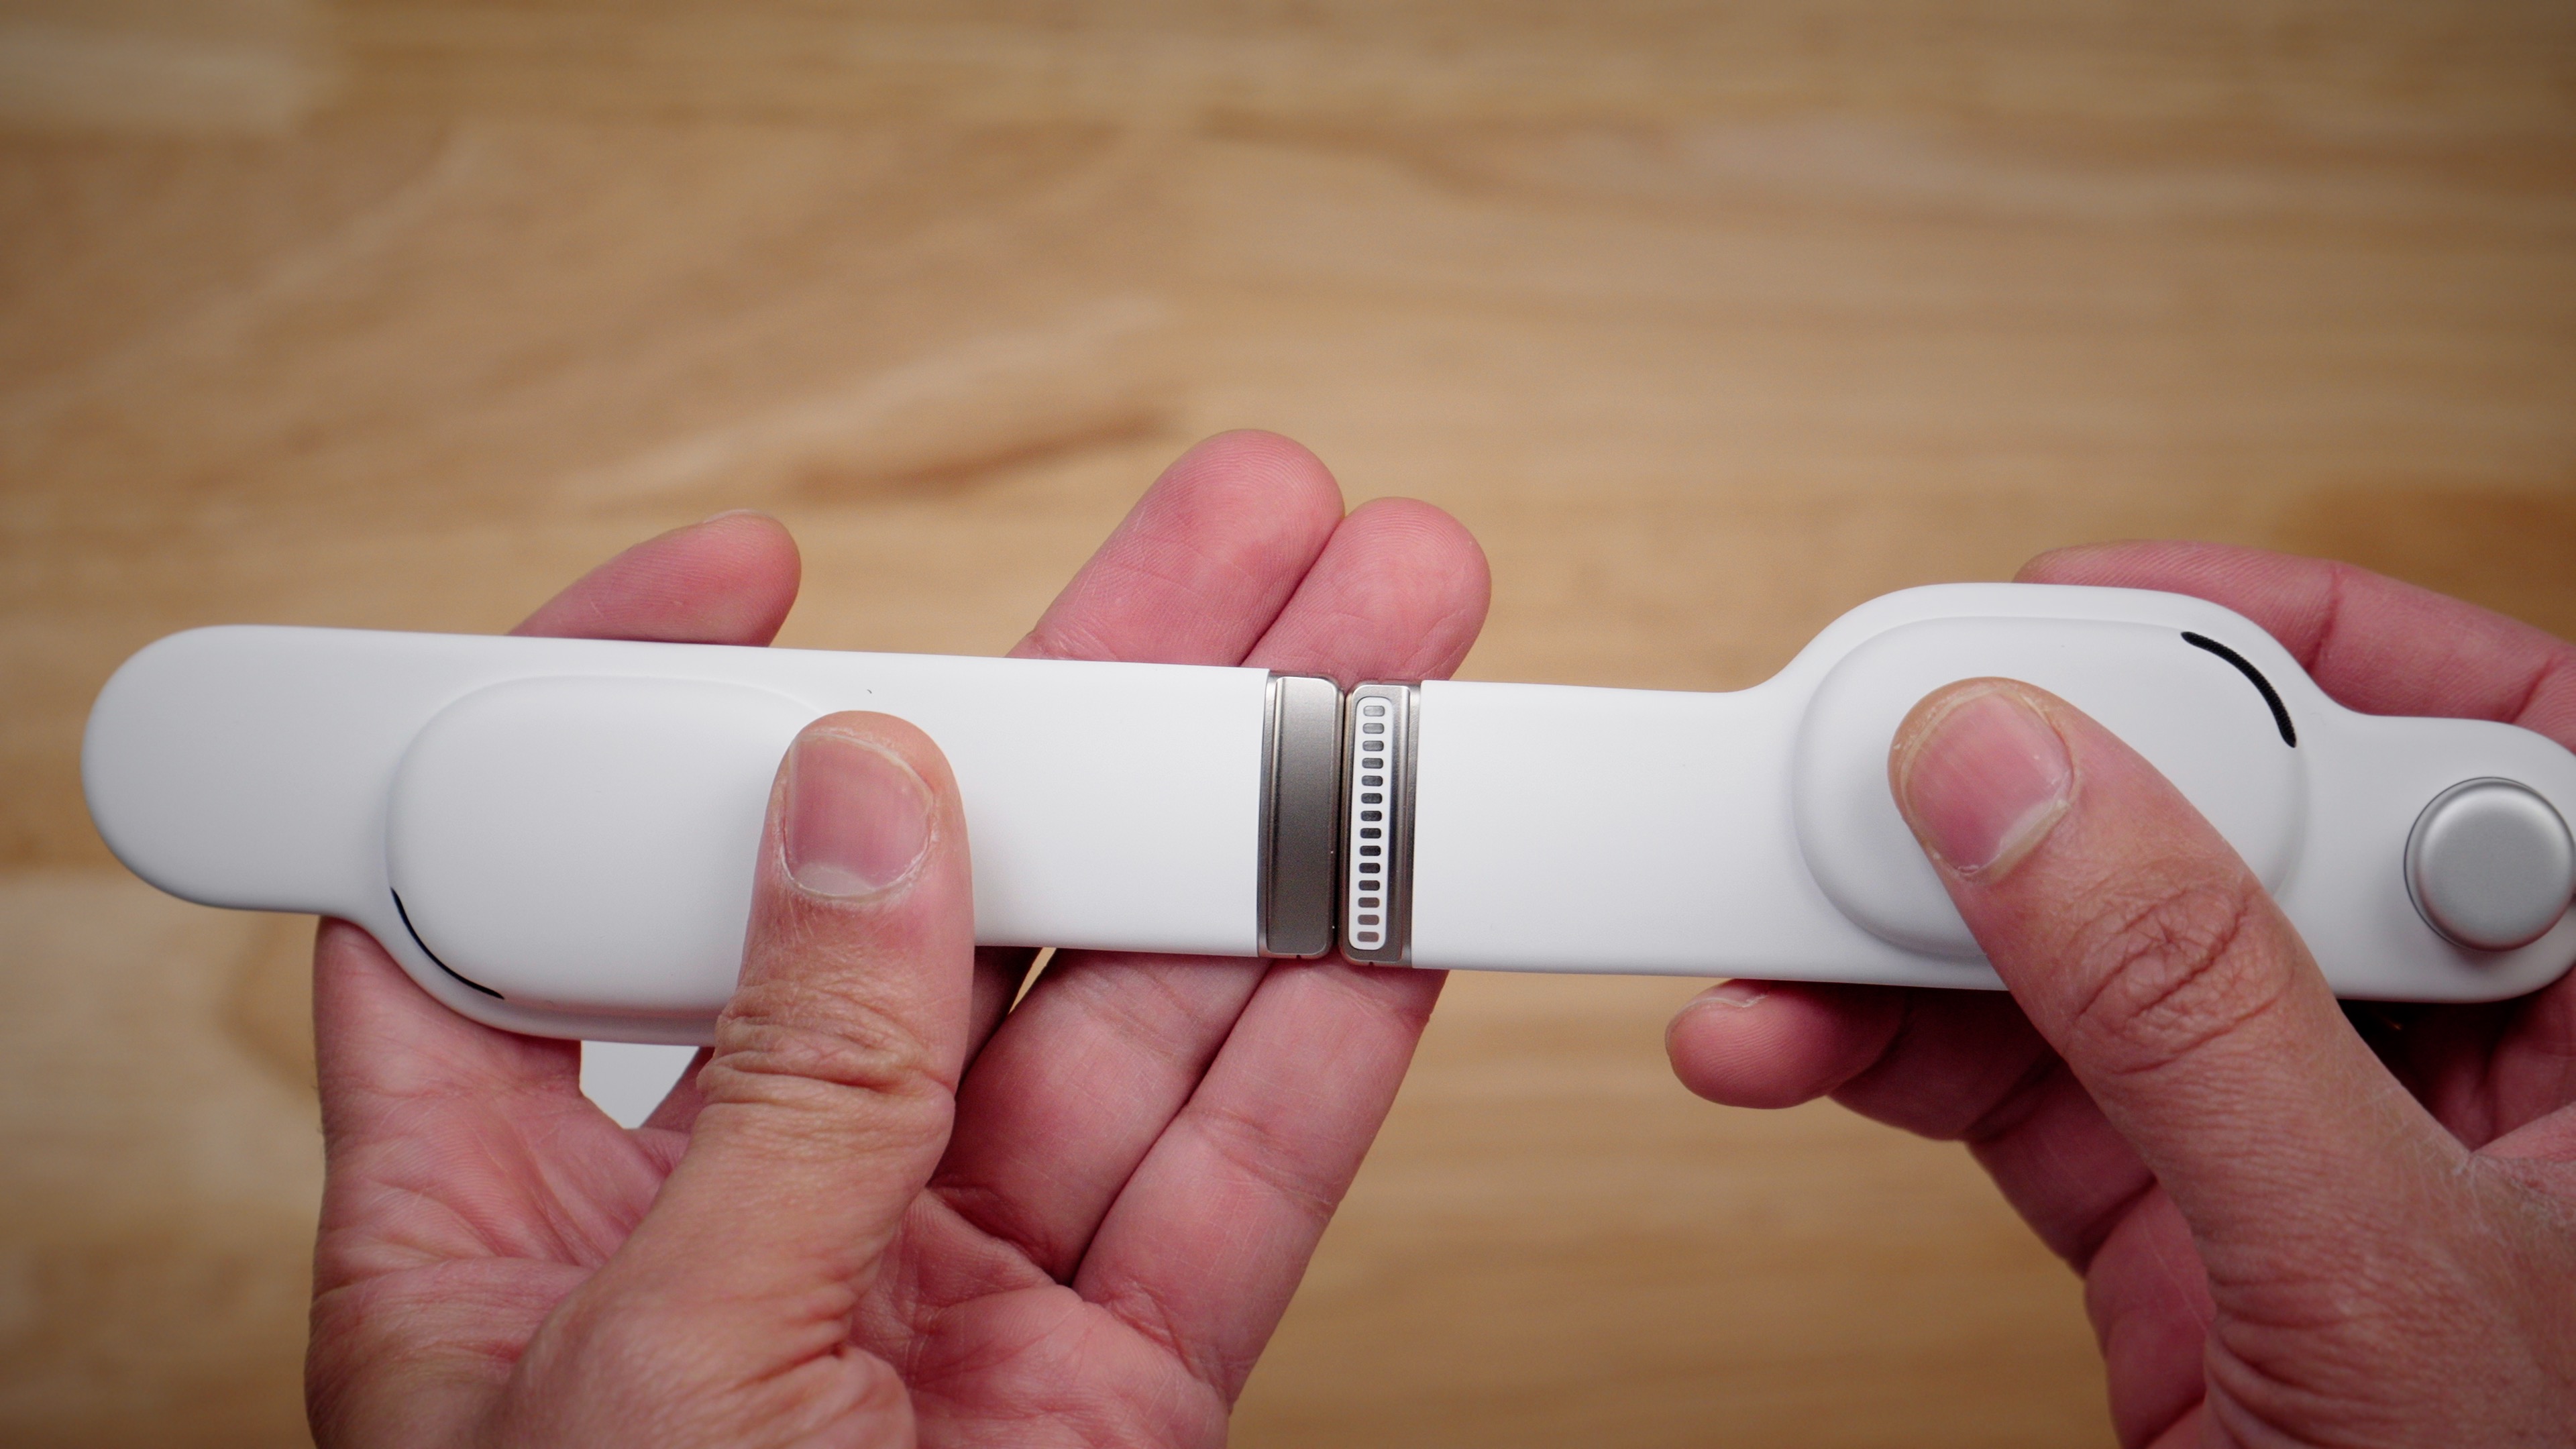 Ремешок разработчика Apple Vision Pro по сравнению с ремешком Audio Strap